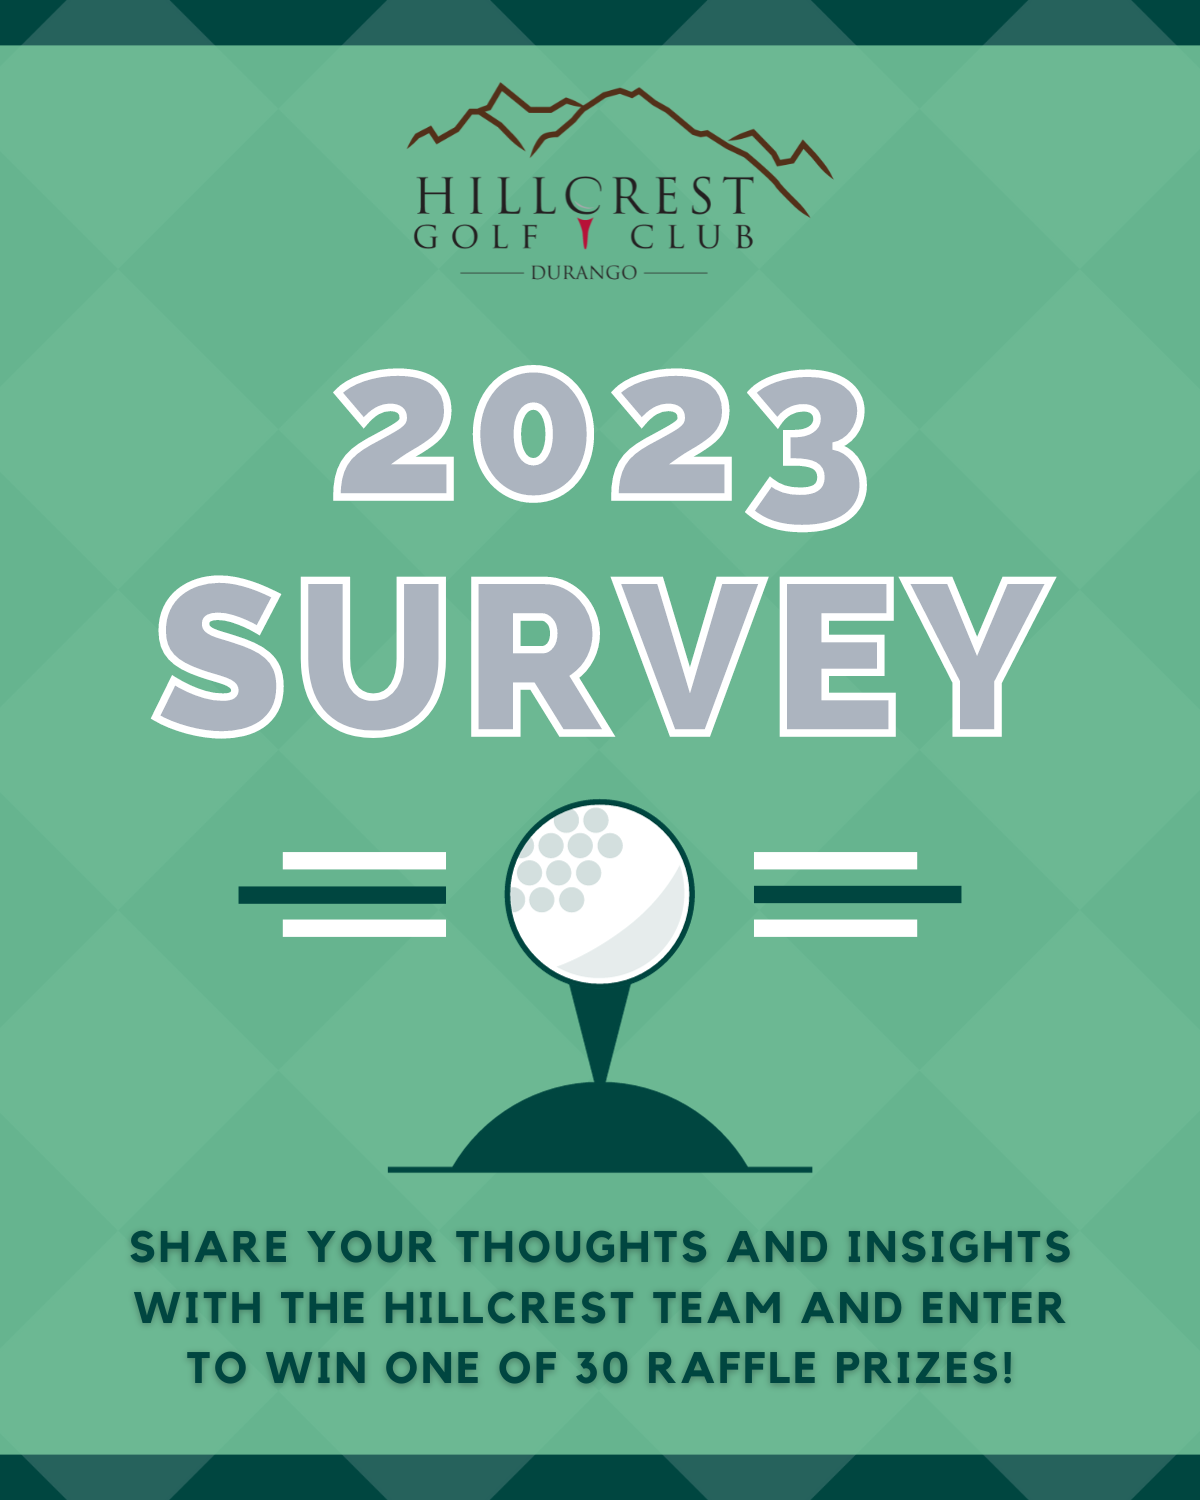 2023 Annual Survey